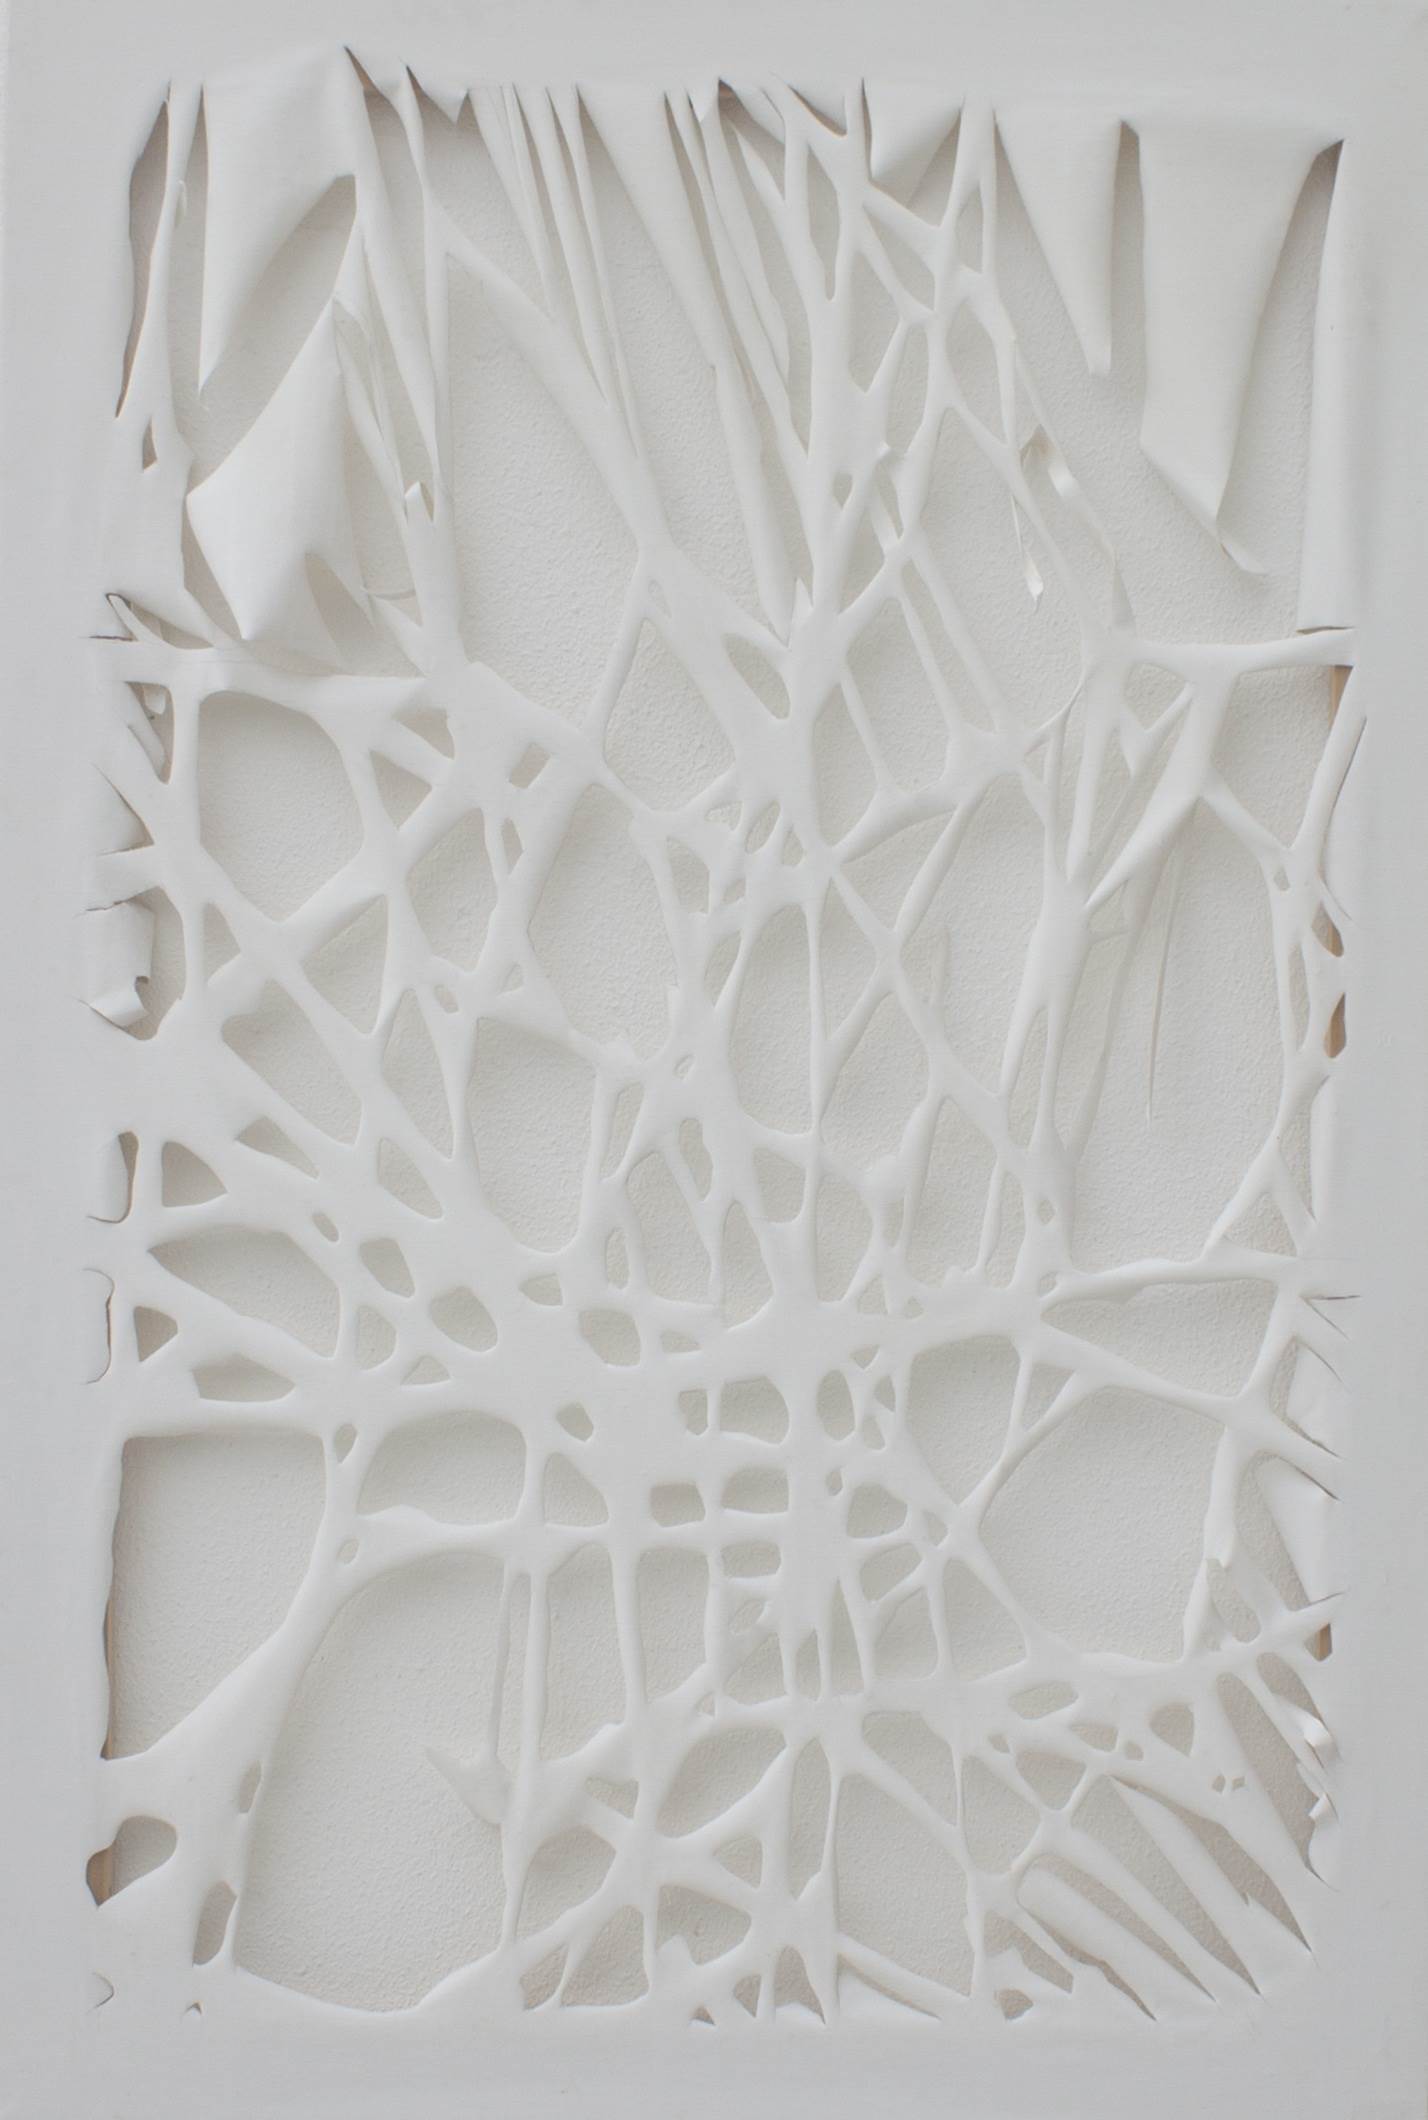 Incisão 1, original Abstrait  Sculpture par Marisa  Piló